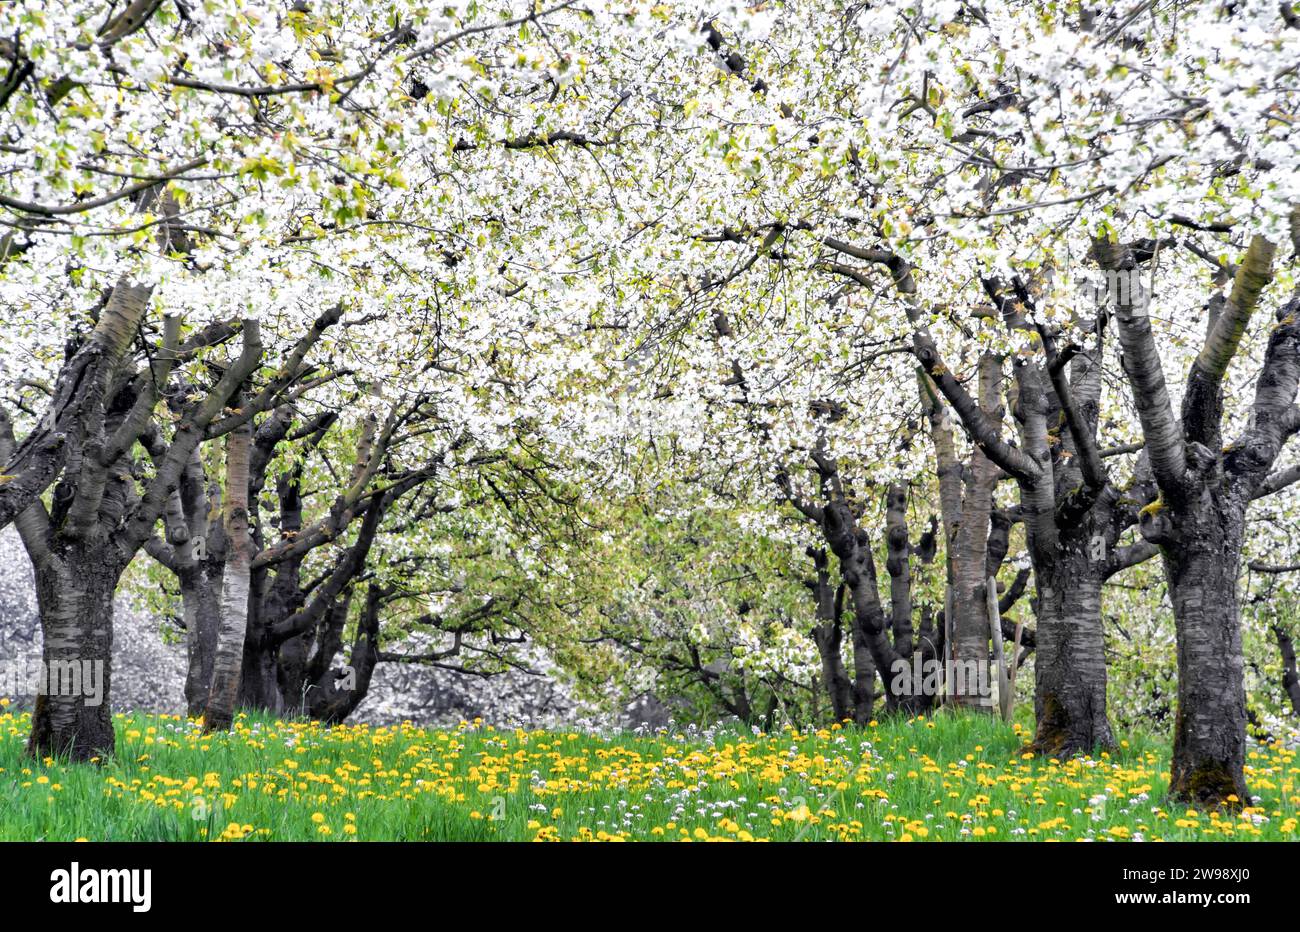 Switzerland, Baselland, Baselbiet, Canton Baselland, Sissach, spring, cherry blossoms, cherry trees, Ergolztal, April, May Stock Photo